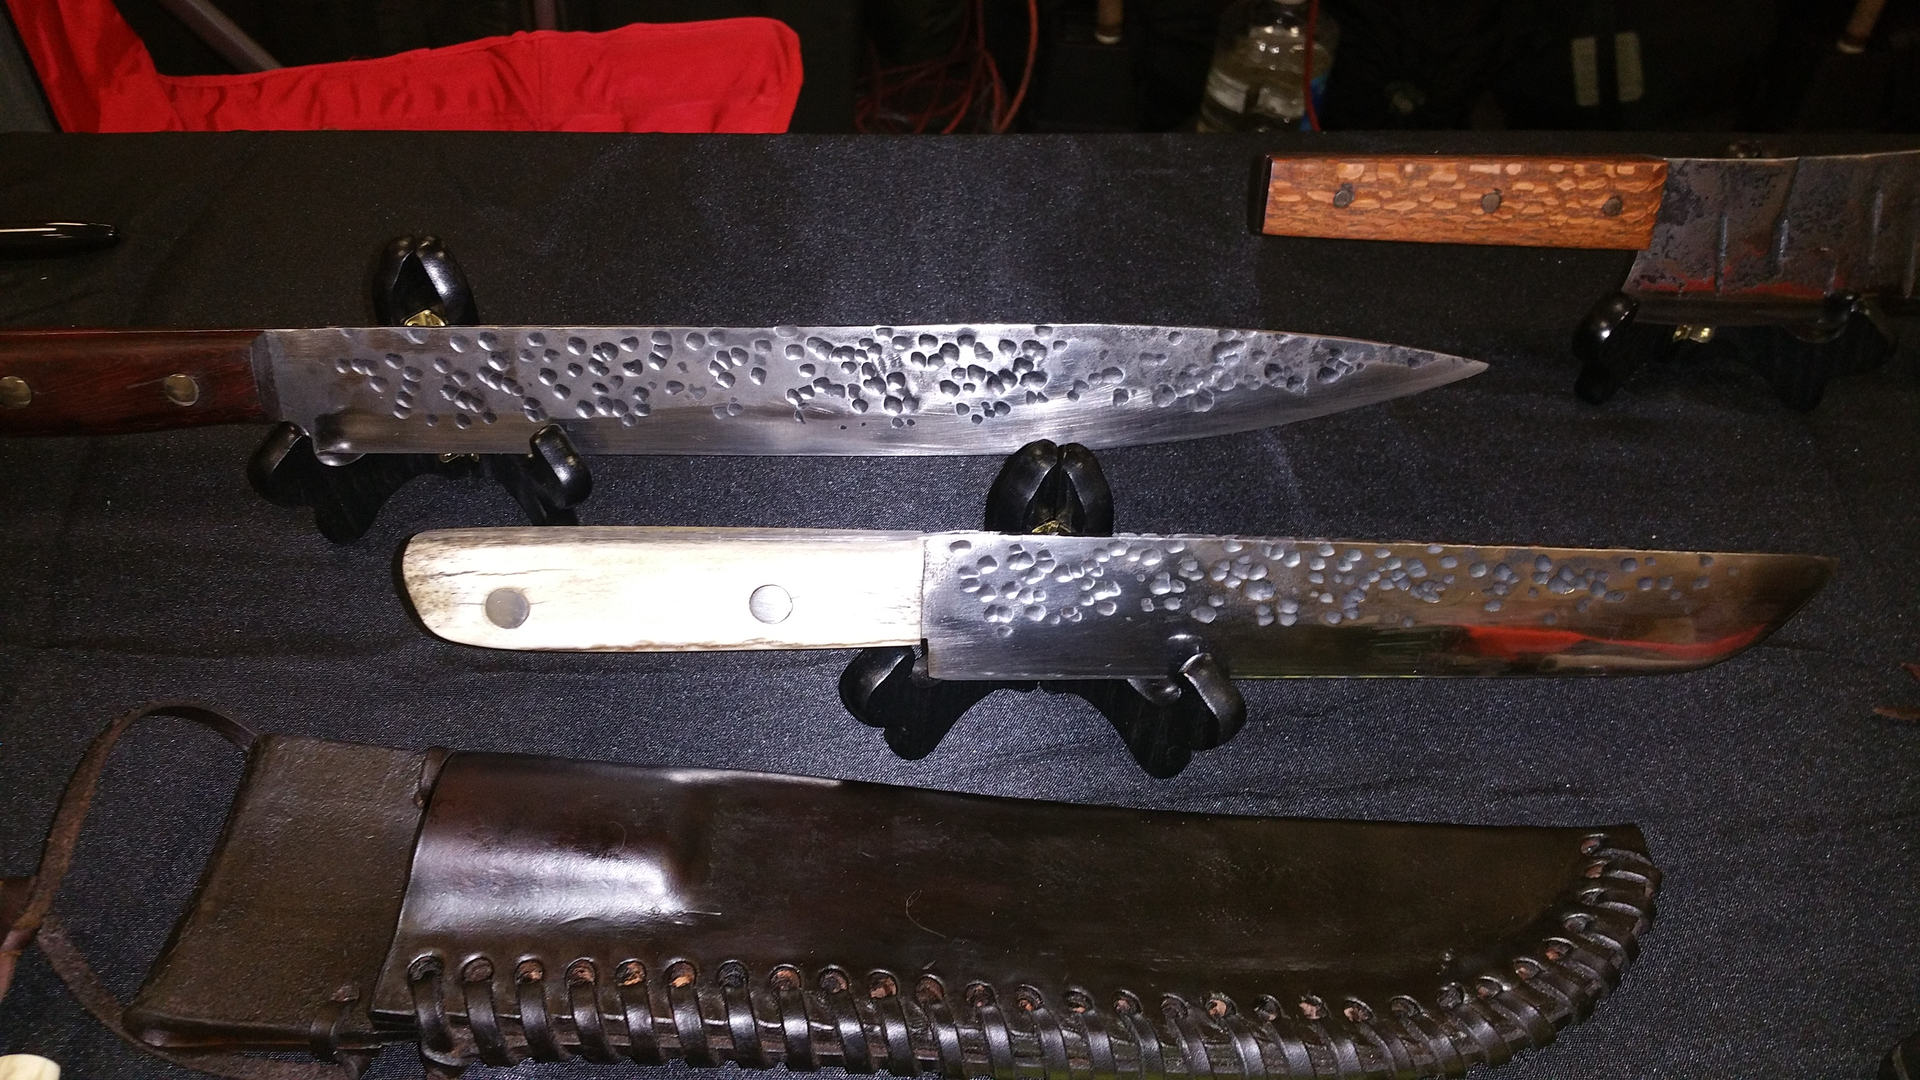 Burgess Forge - Custom Knife Maker, Blacksmith